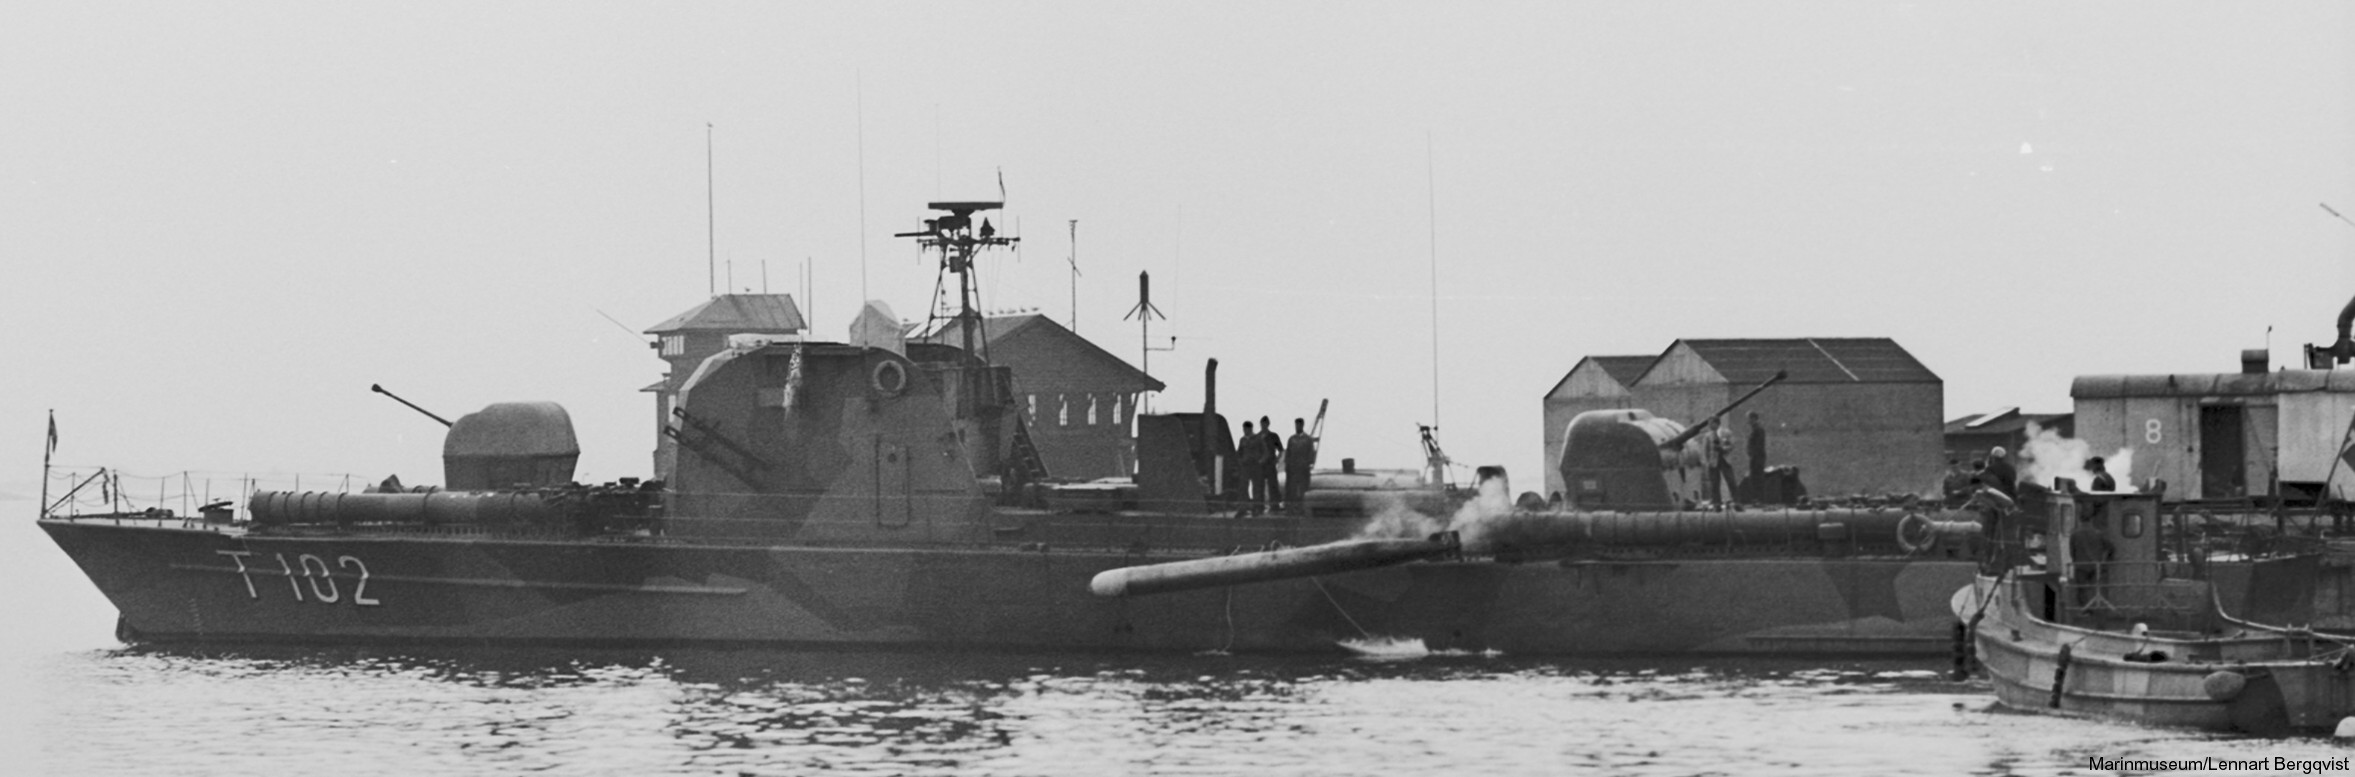 t102 plejad hms hswms class fast attack craft torpedo boat vessel swedish navy svenska marinen 02